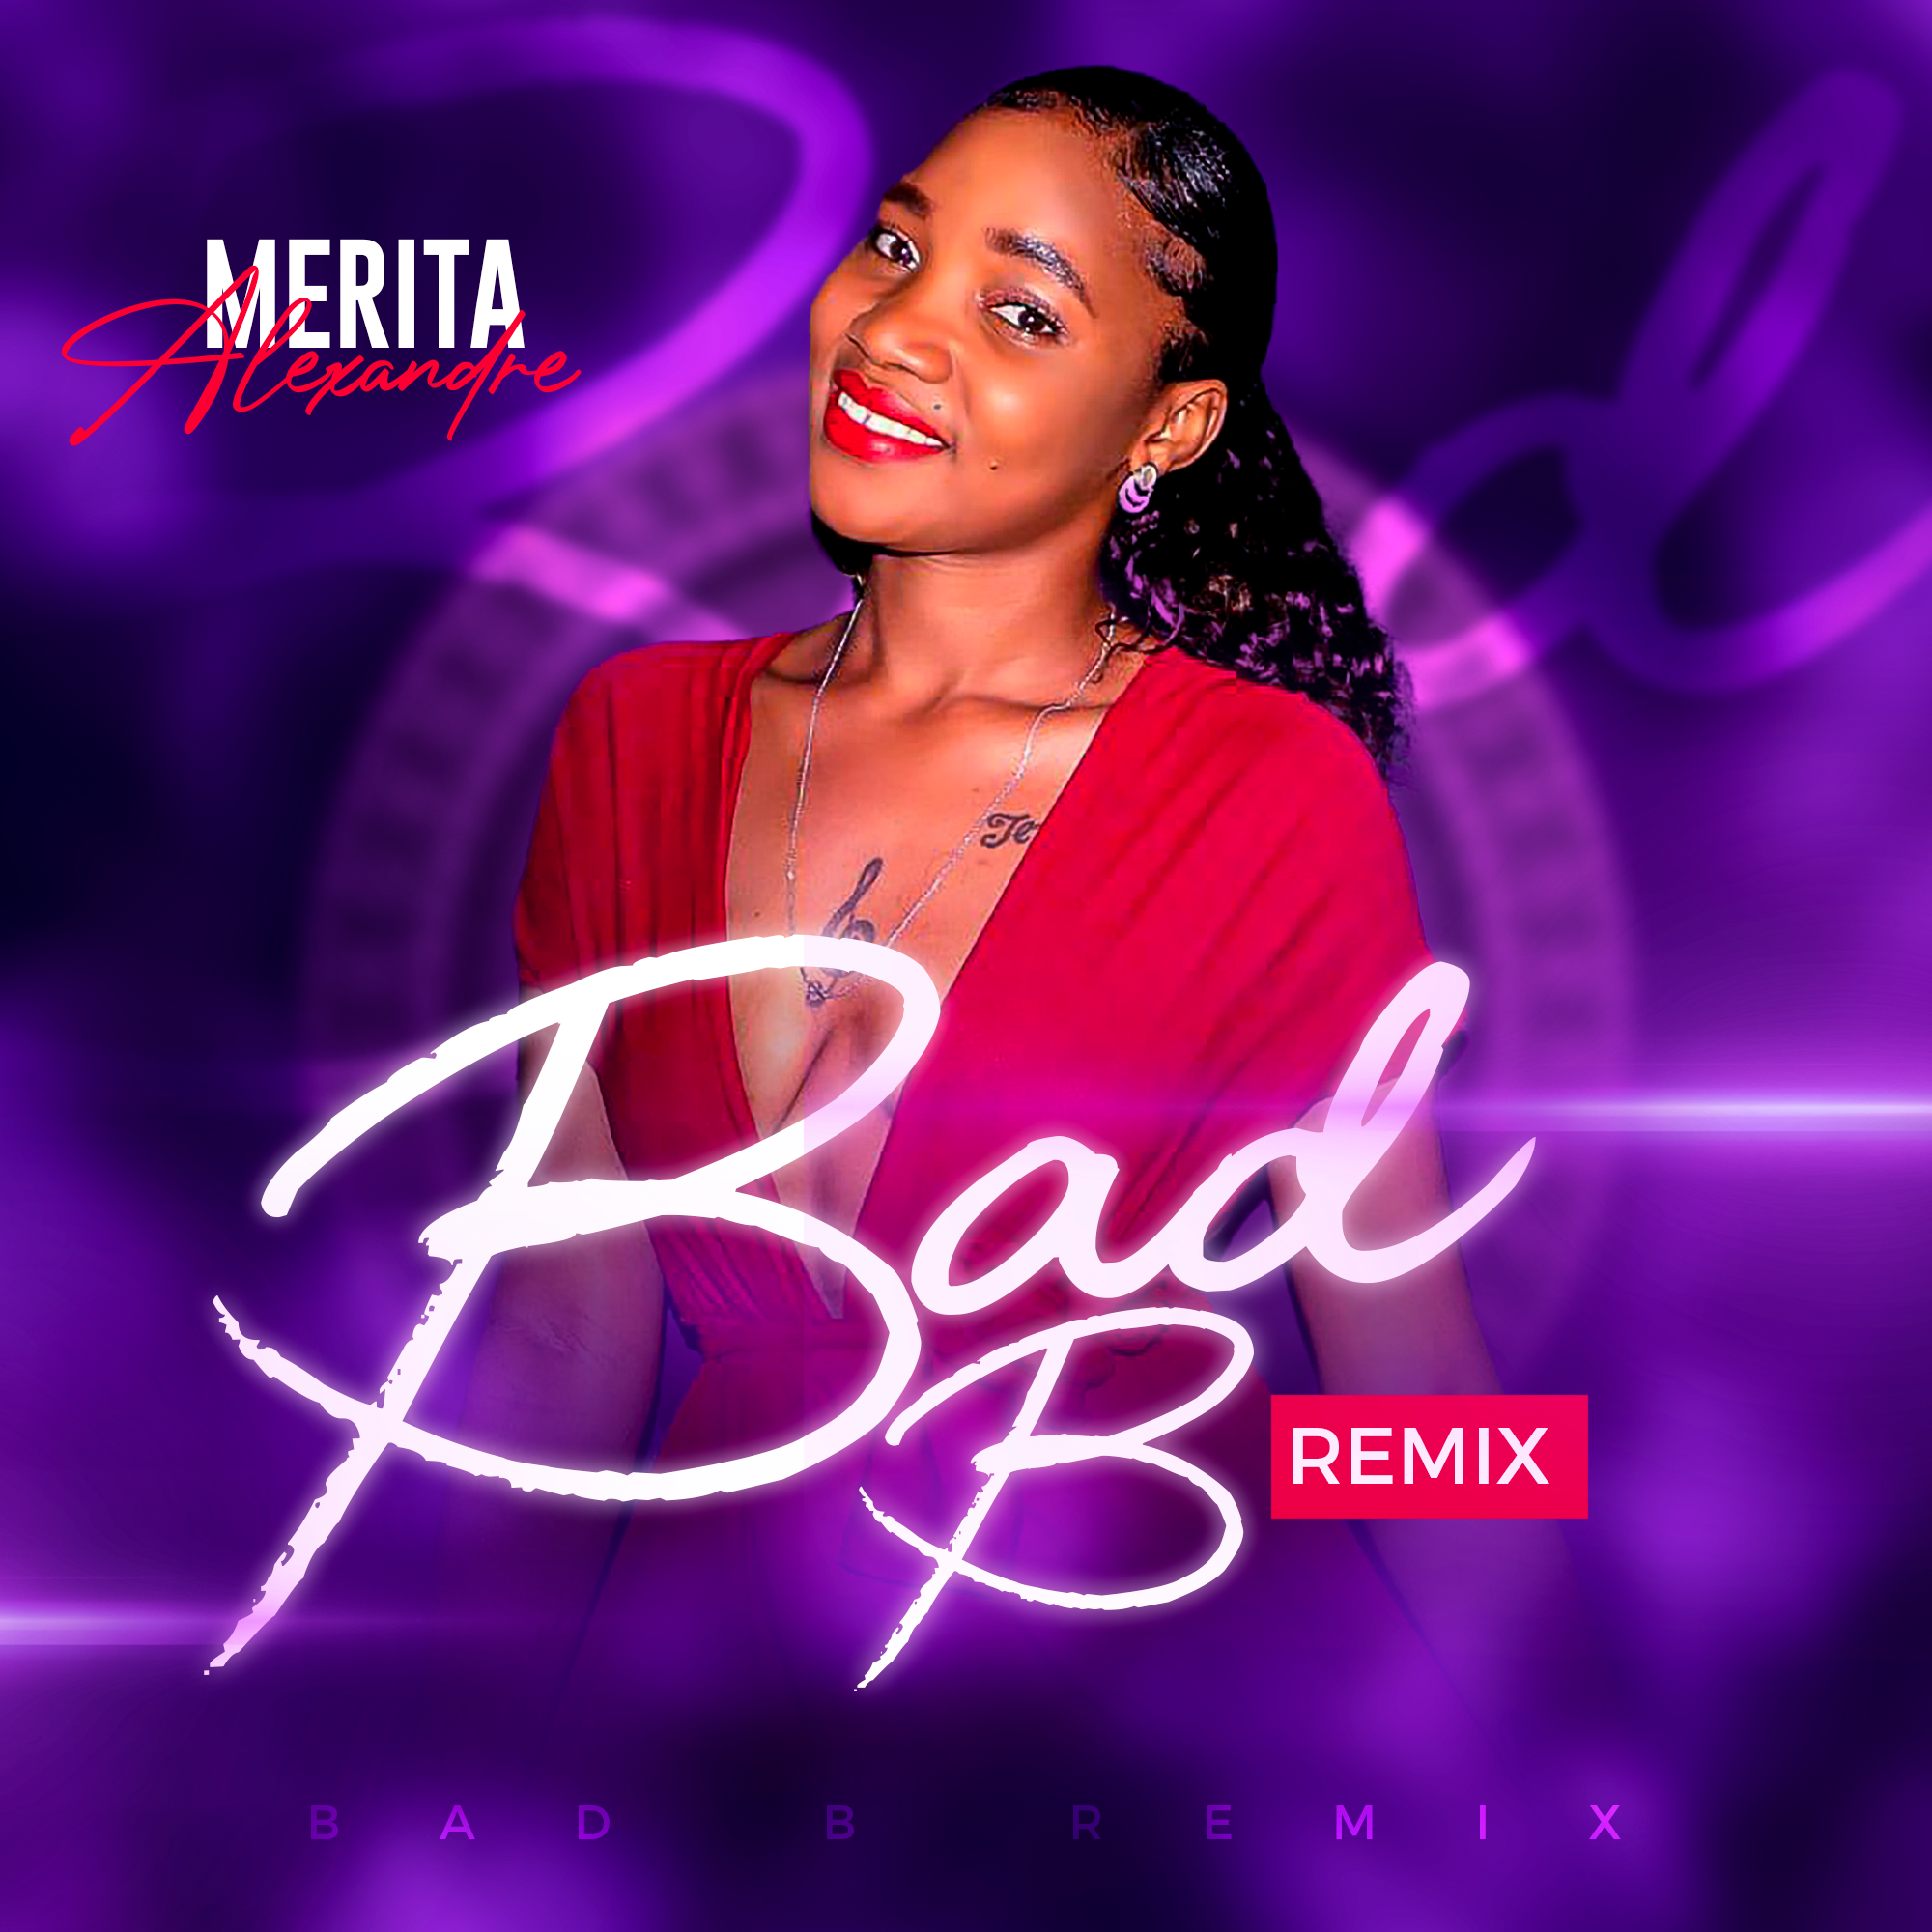 Merita Alexandre - Bad B Remix